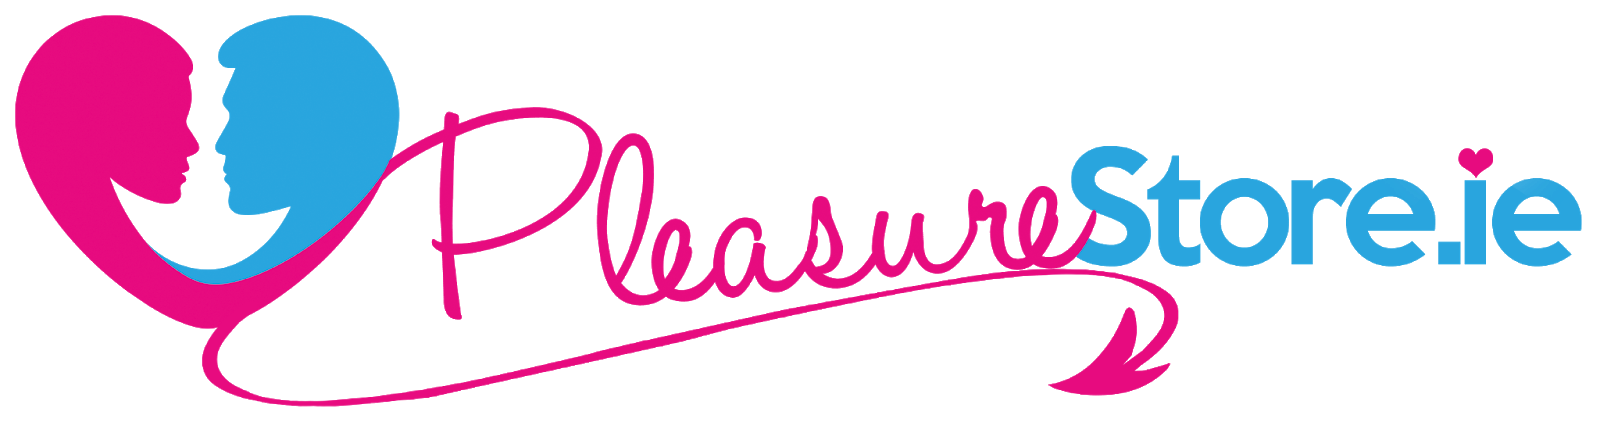 pleasure store logo